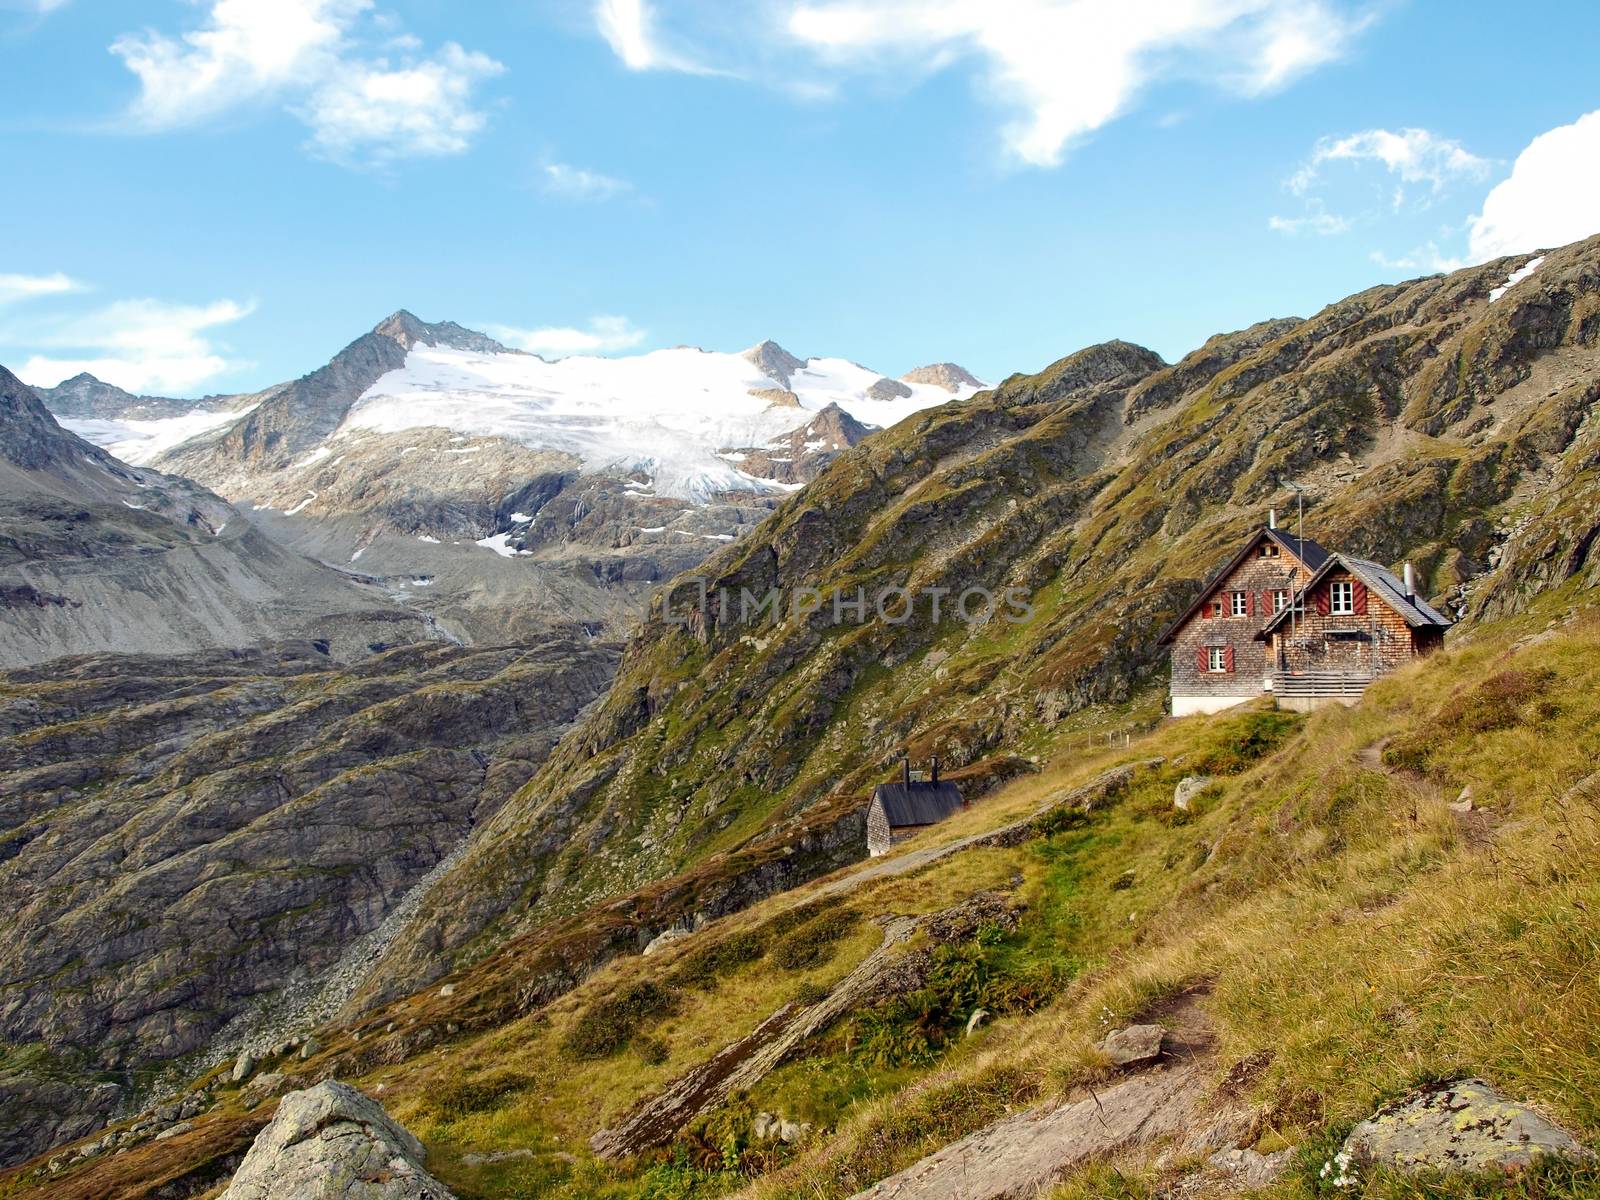 alpine house on the glacier mountains, switzerland alps